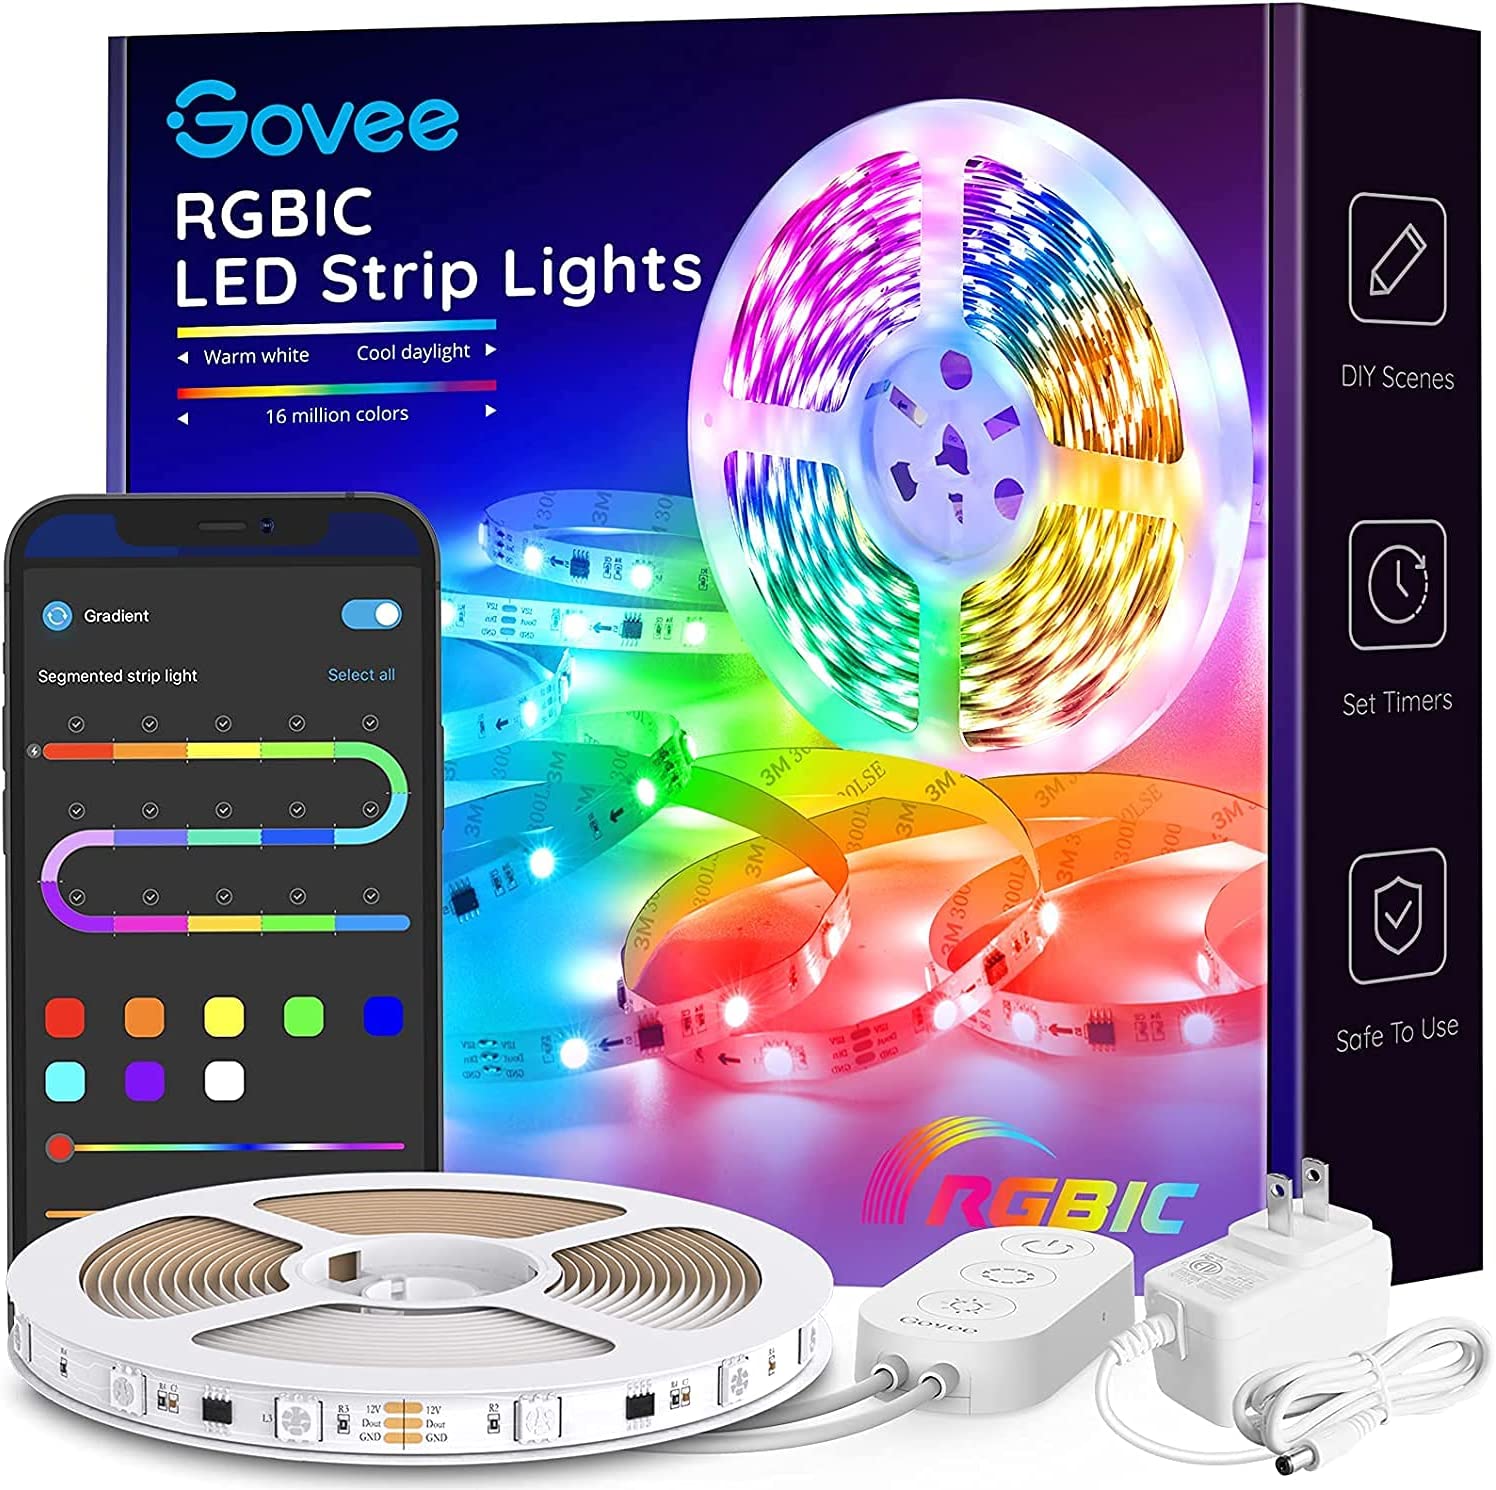 Govee LED Strip Lights, 16.4Ft RGB LED Light Strip with Remote